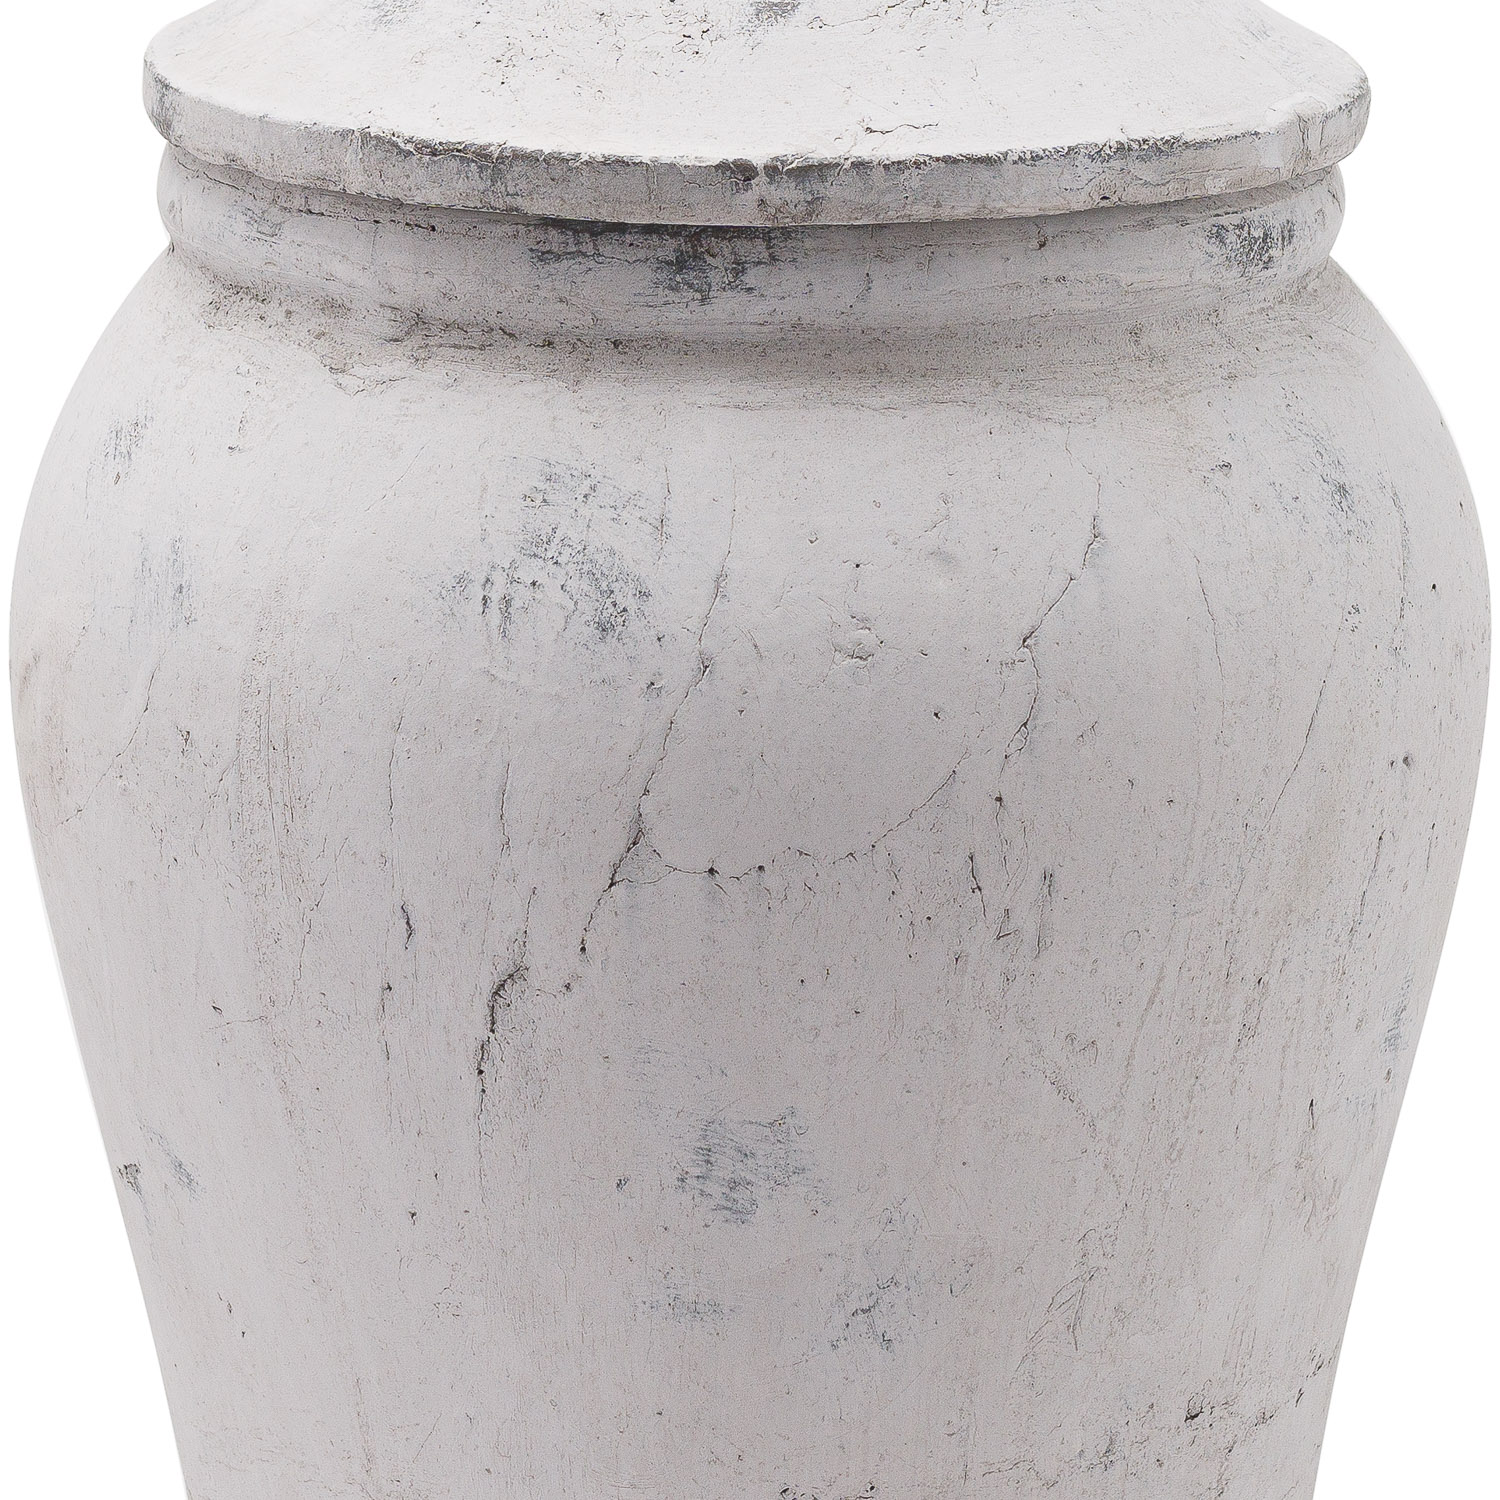 Bloomville Stone Ginger Jar - Image 2